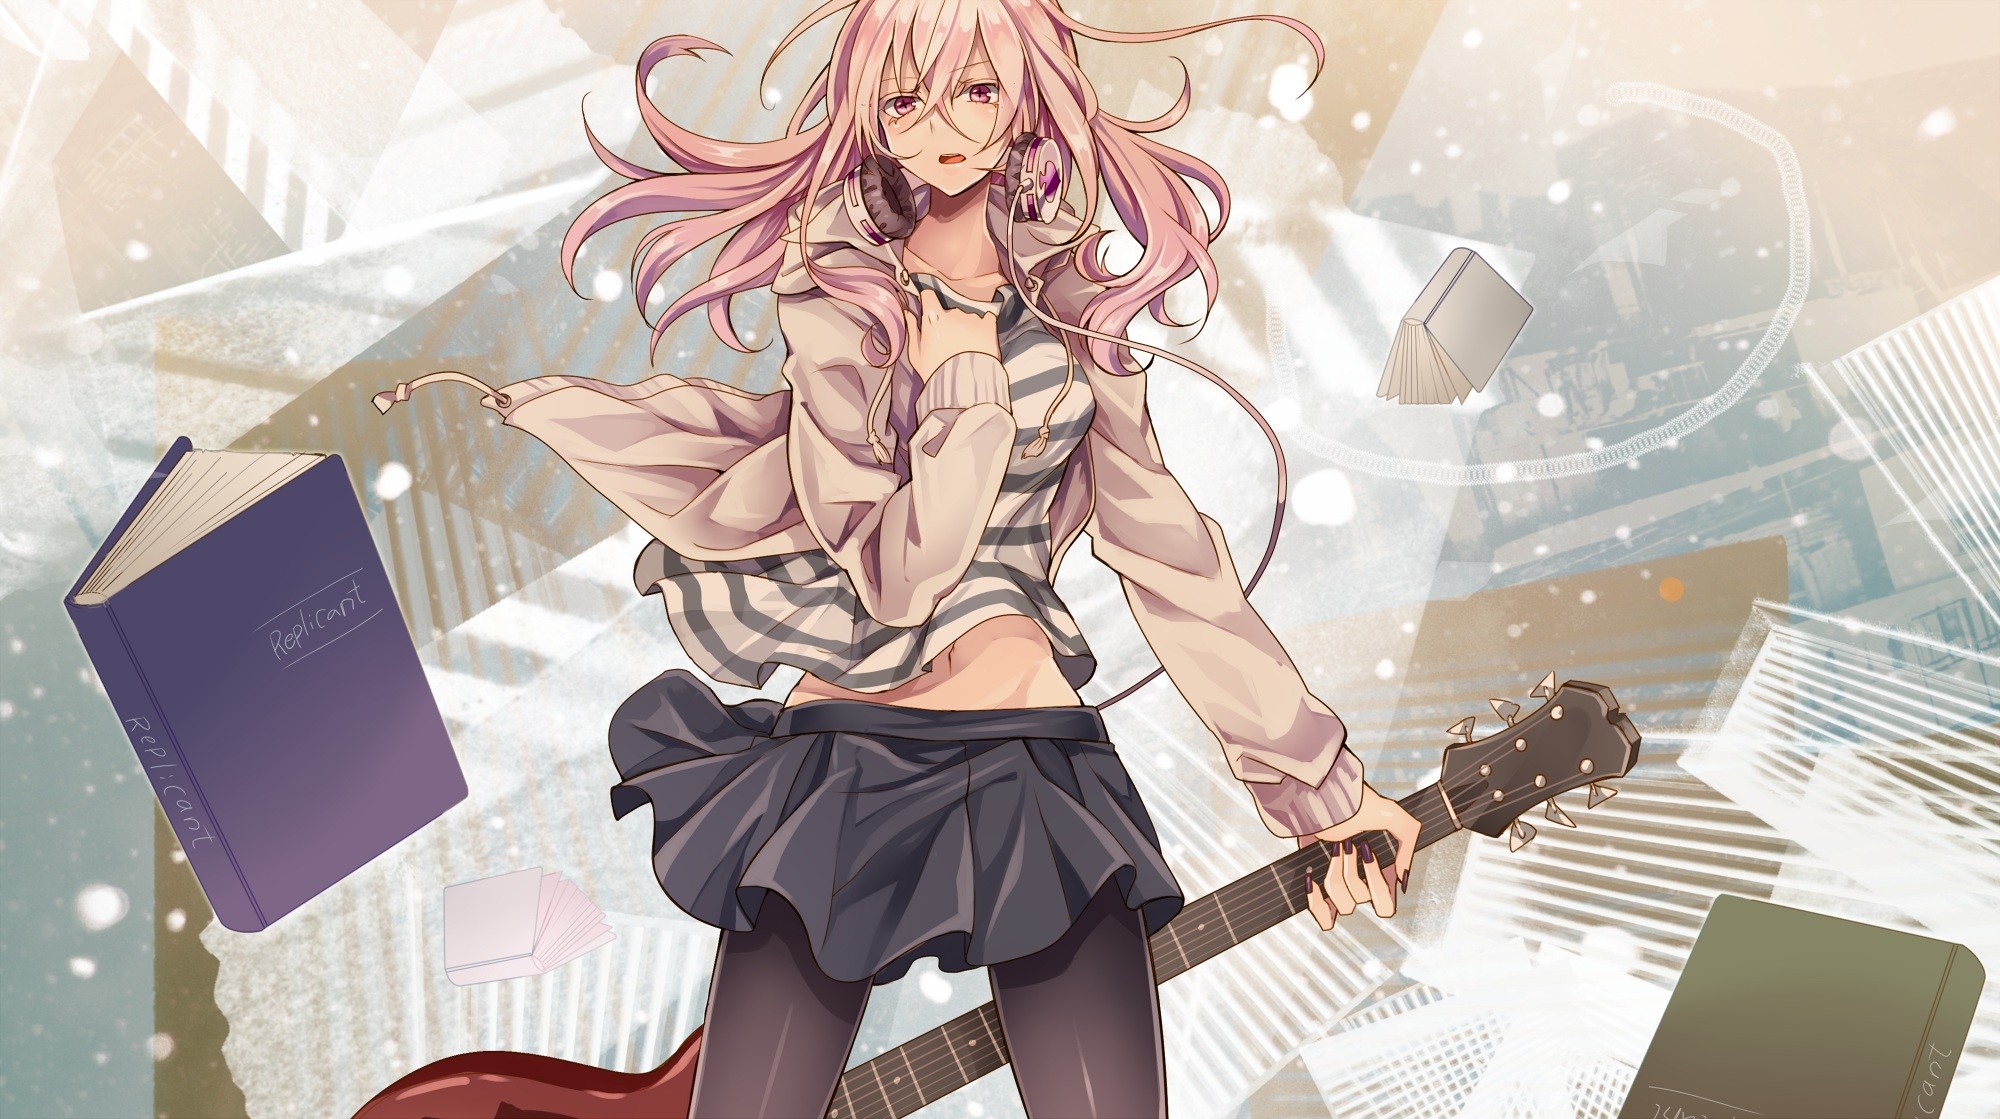 Gahata Mage Utau Anime Girls Pink Hair Red Eyes Long Hair Headphones Skirt Guitar 2000x1119